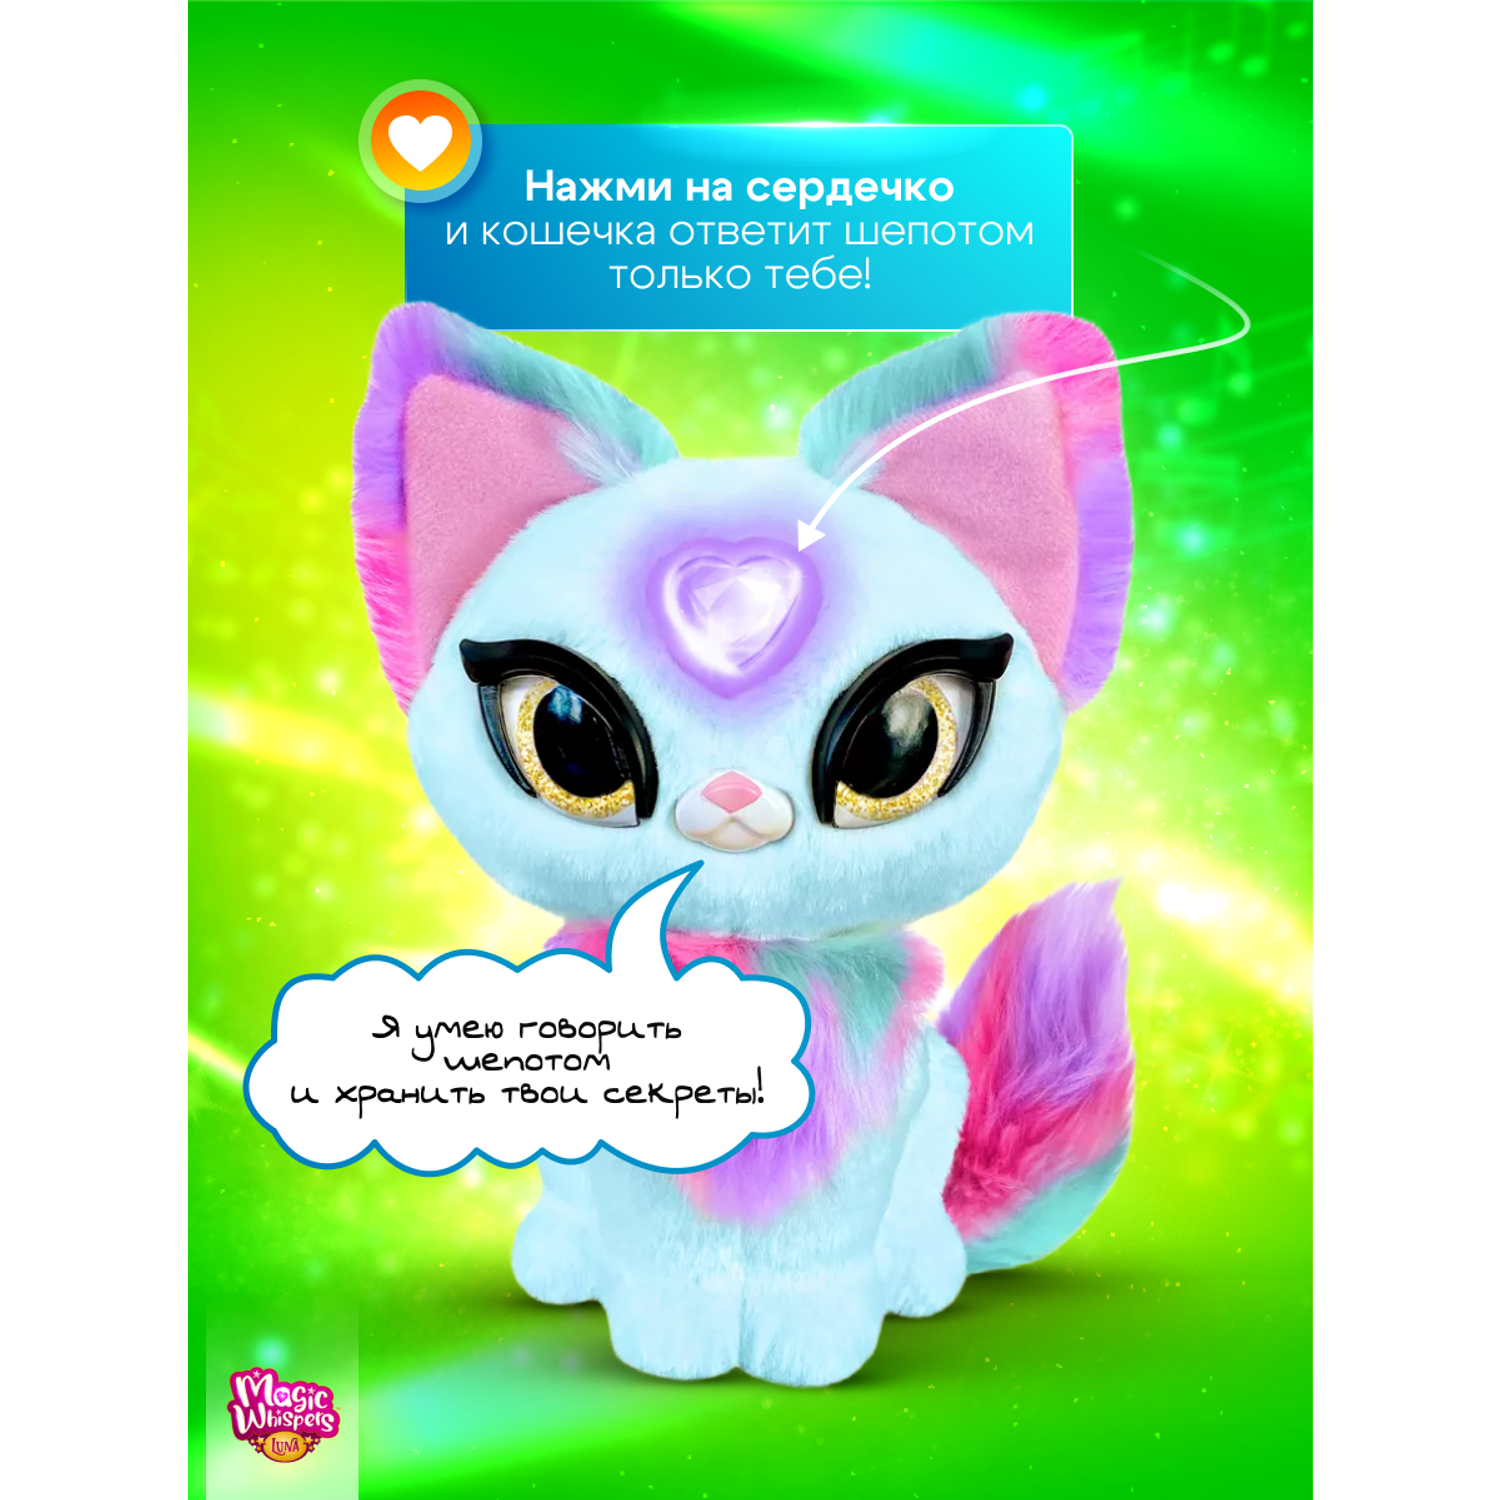 Интерактивная игрушка My Fuzzy Friends Волшебная кошечка Скай Magic whispers - фото 4